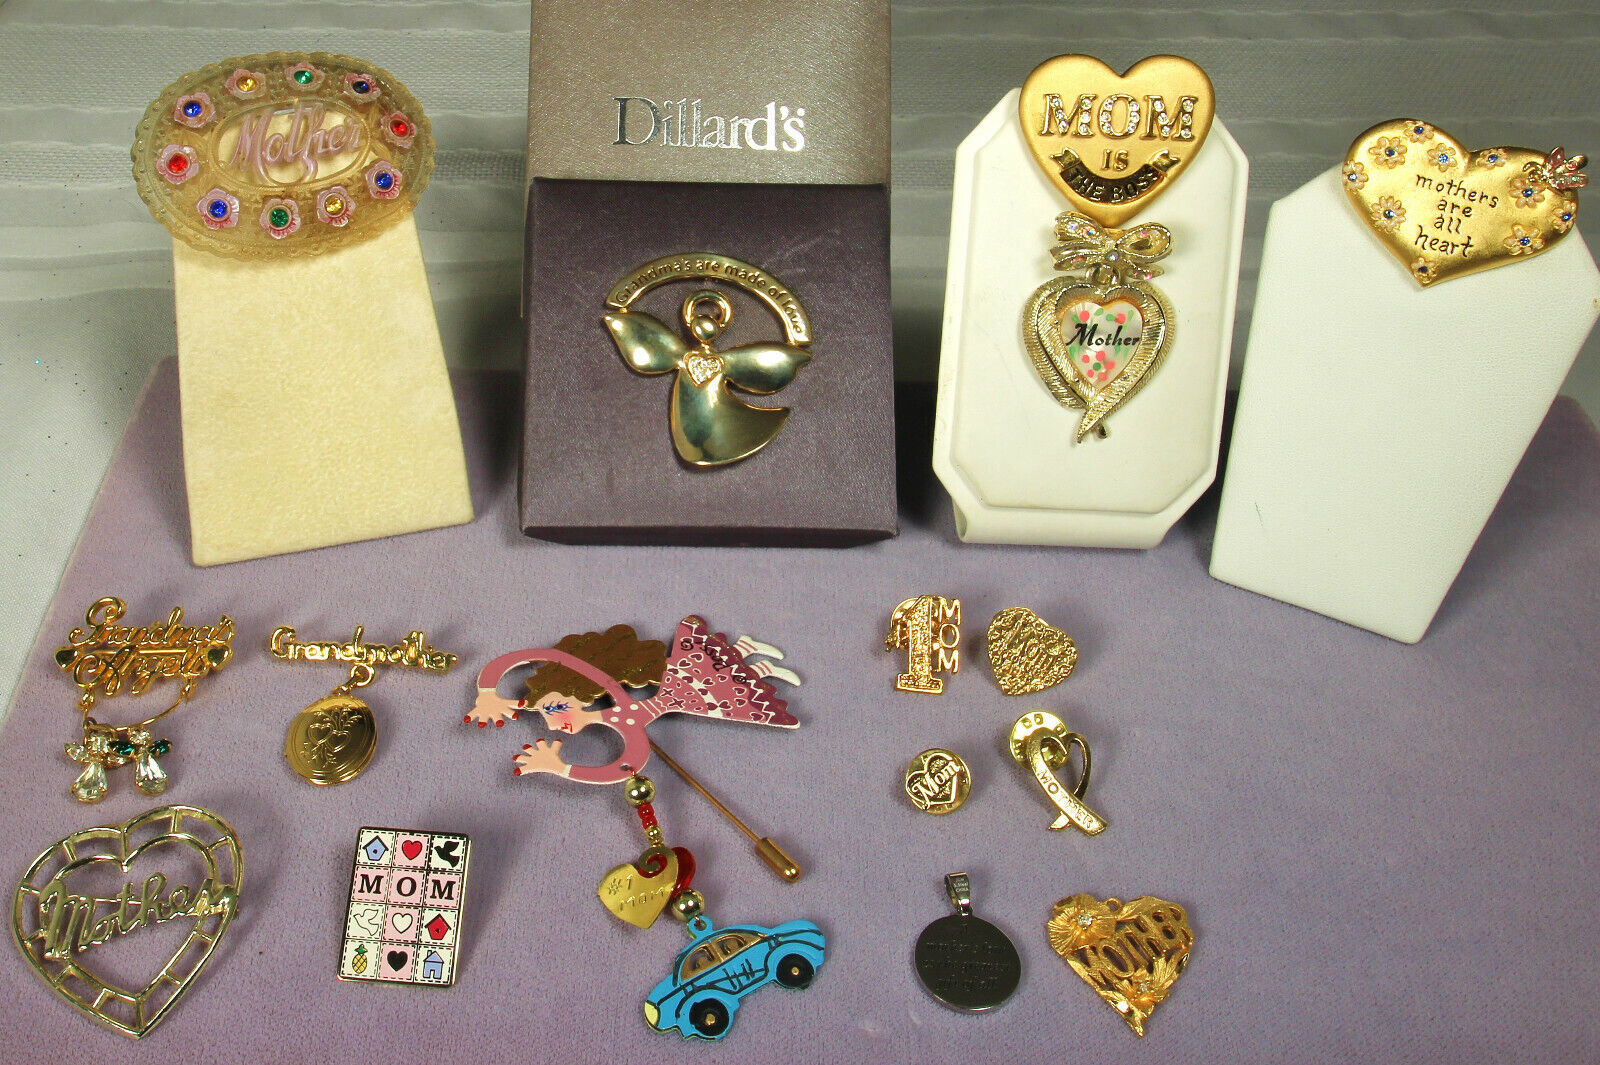 MOTHER GRANDMOTHER Jewelry LOT 16 pieces Hearts Locket Pins Pendants 1920s-Now Rossi AJMC Dillards